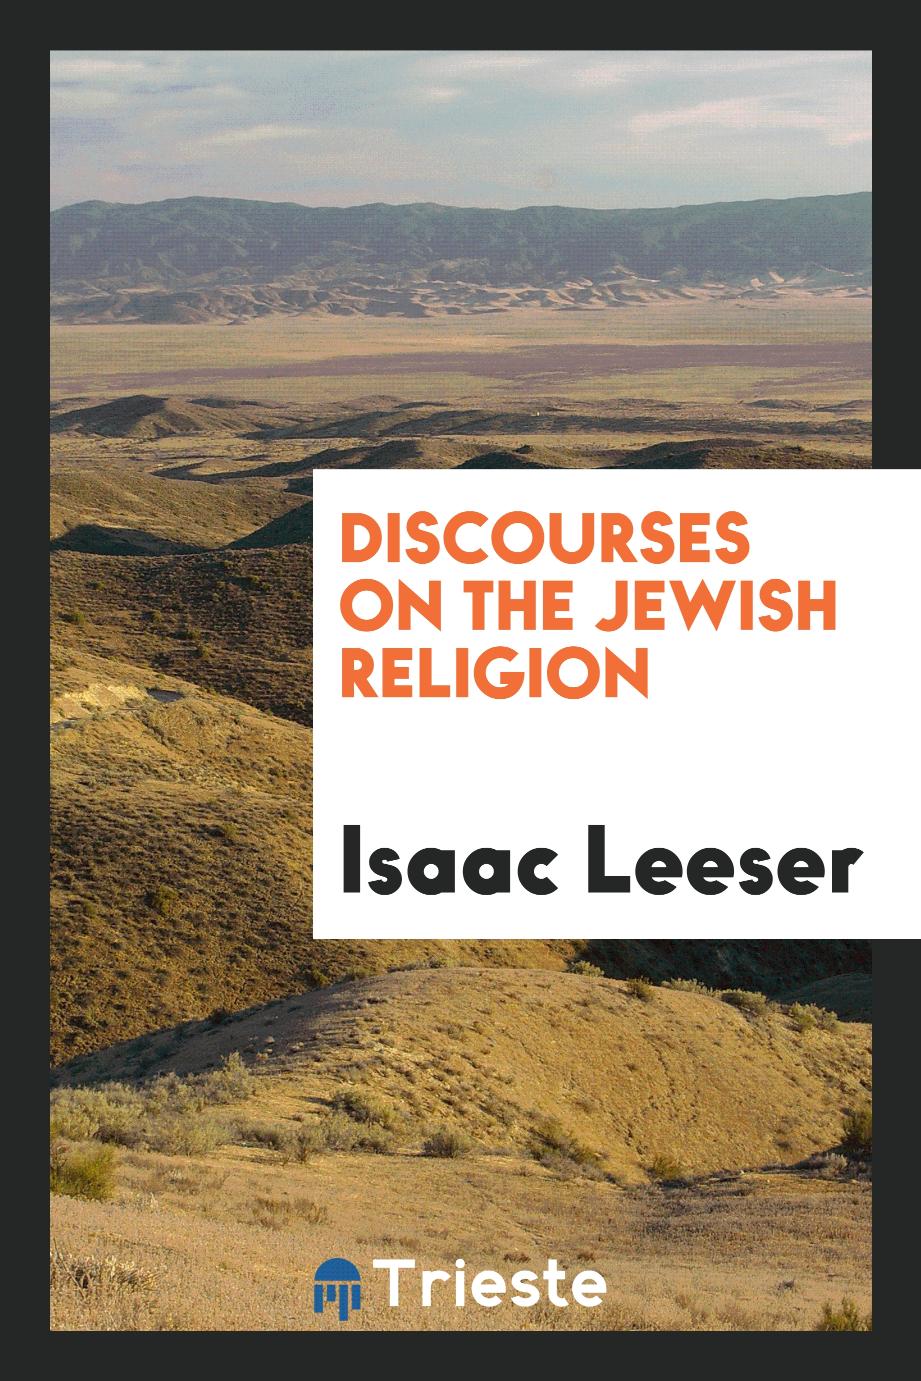 Discourses on the Jewish religion